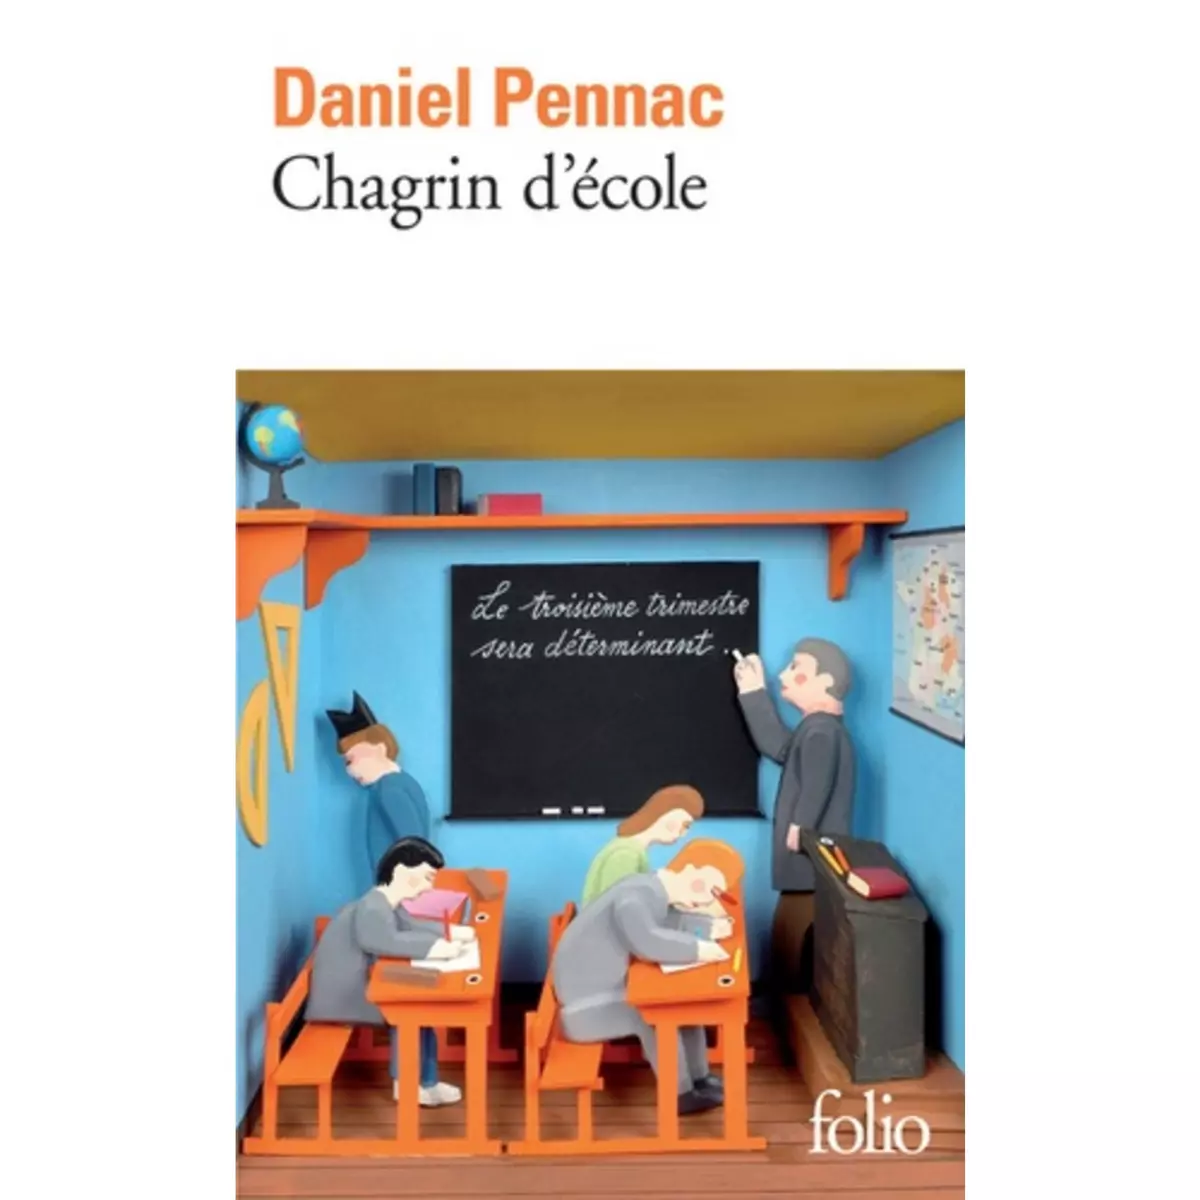  CHAGRIN D'ECOLE, Pennac Daniel